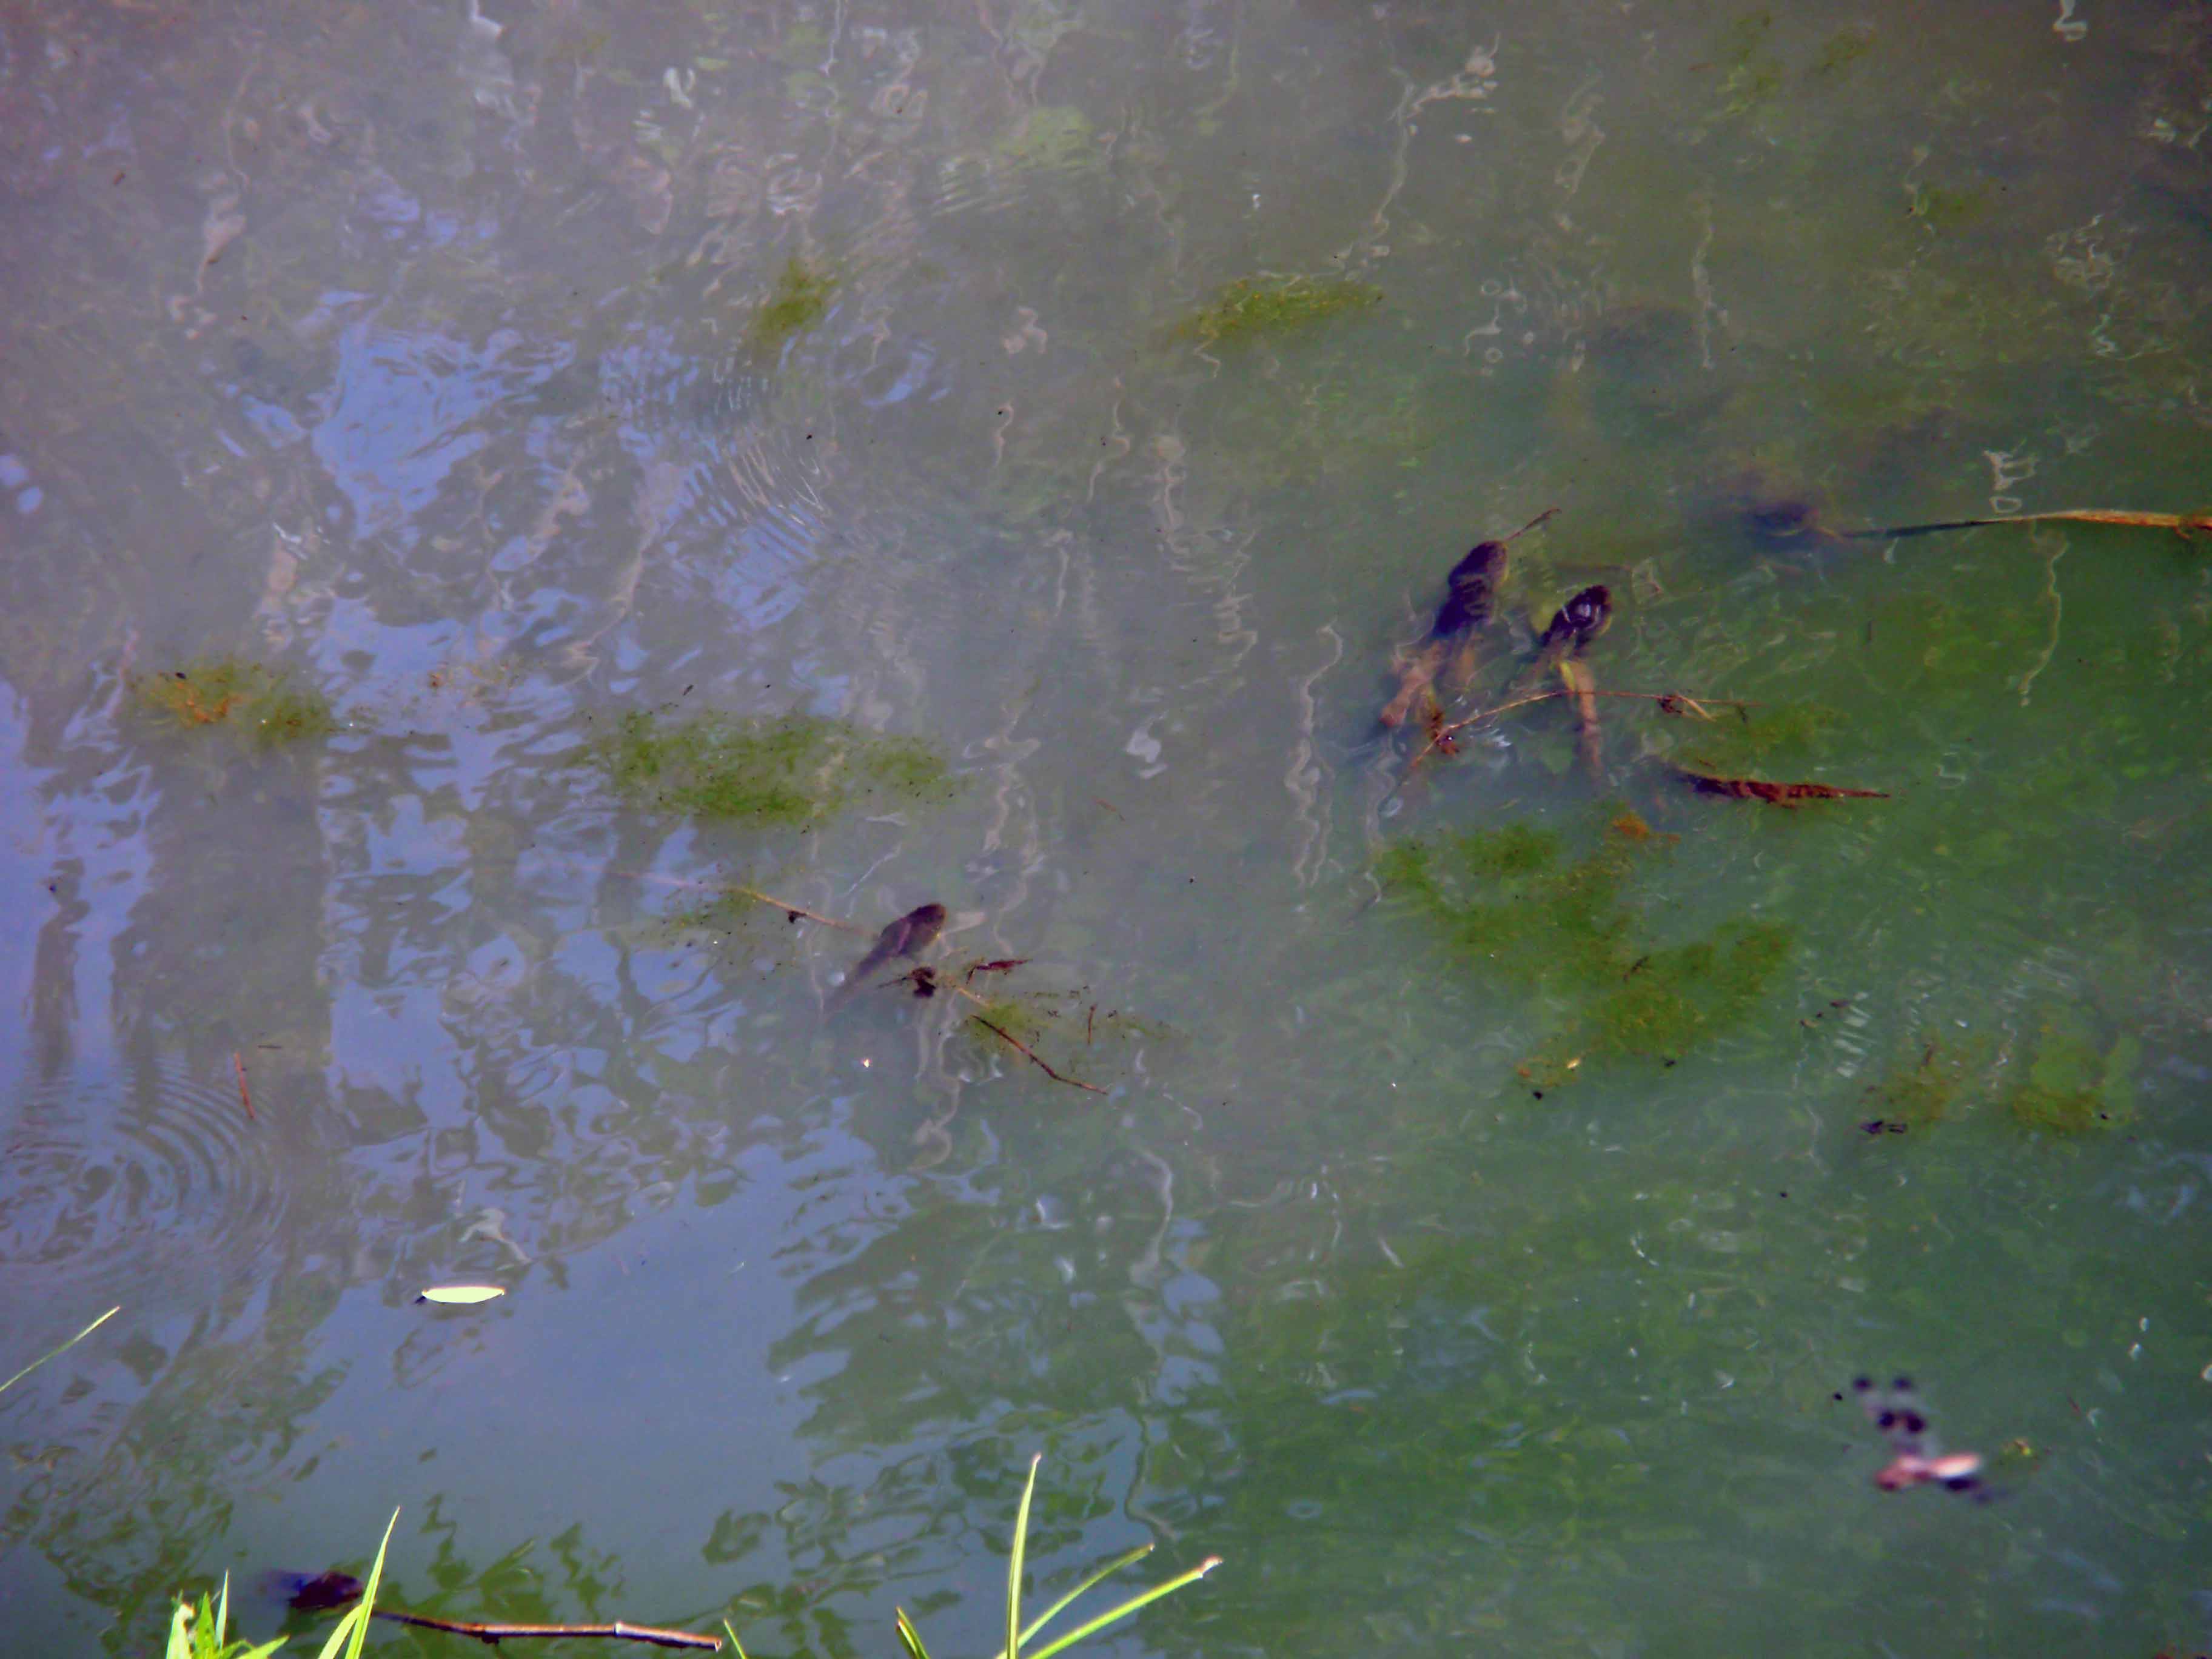 Very large tadpoles